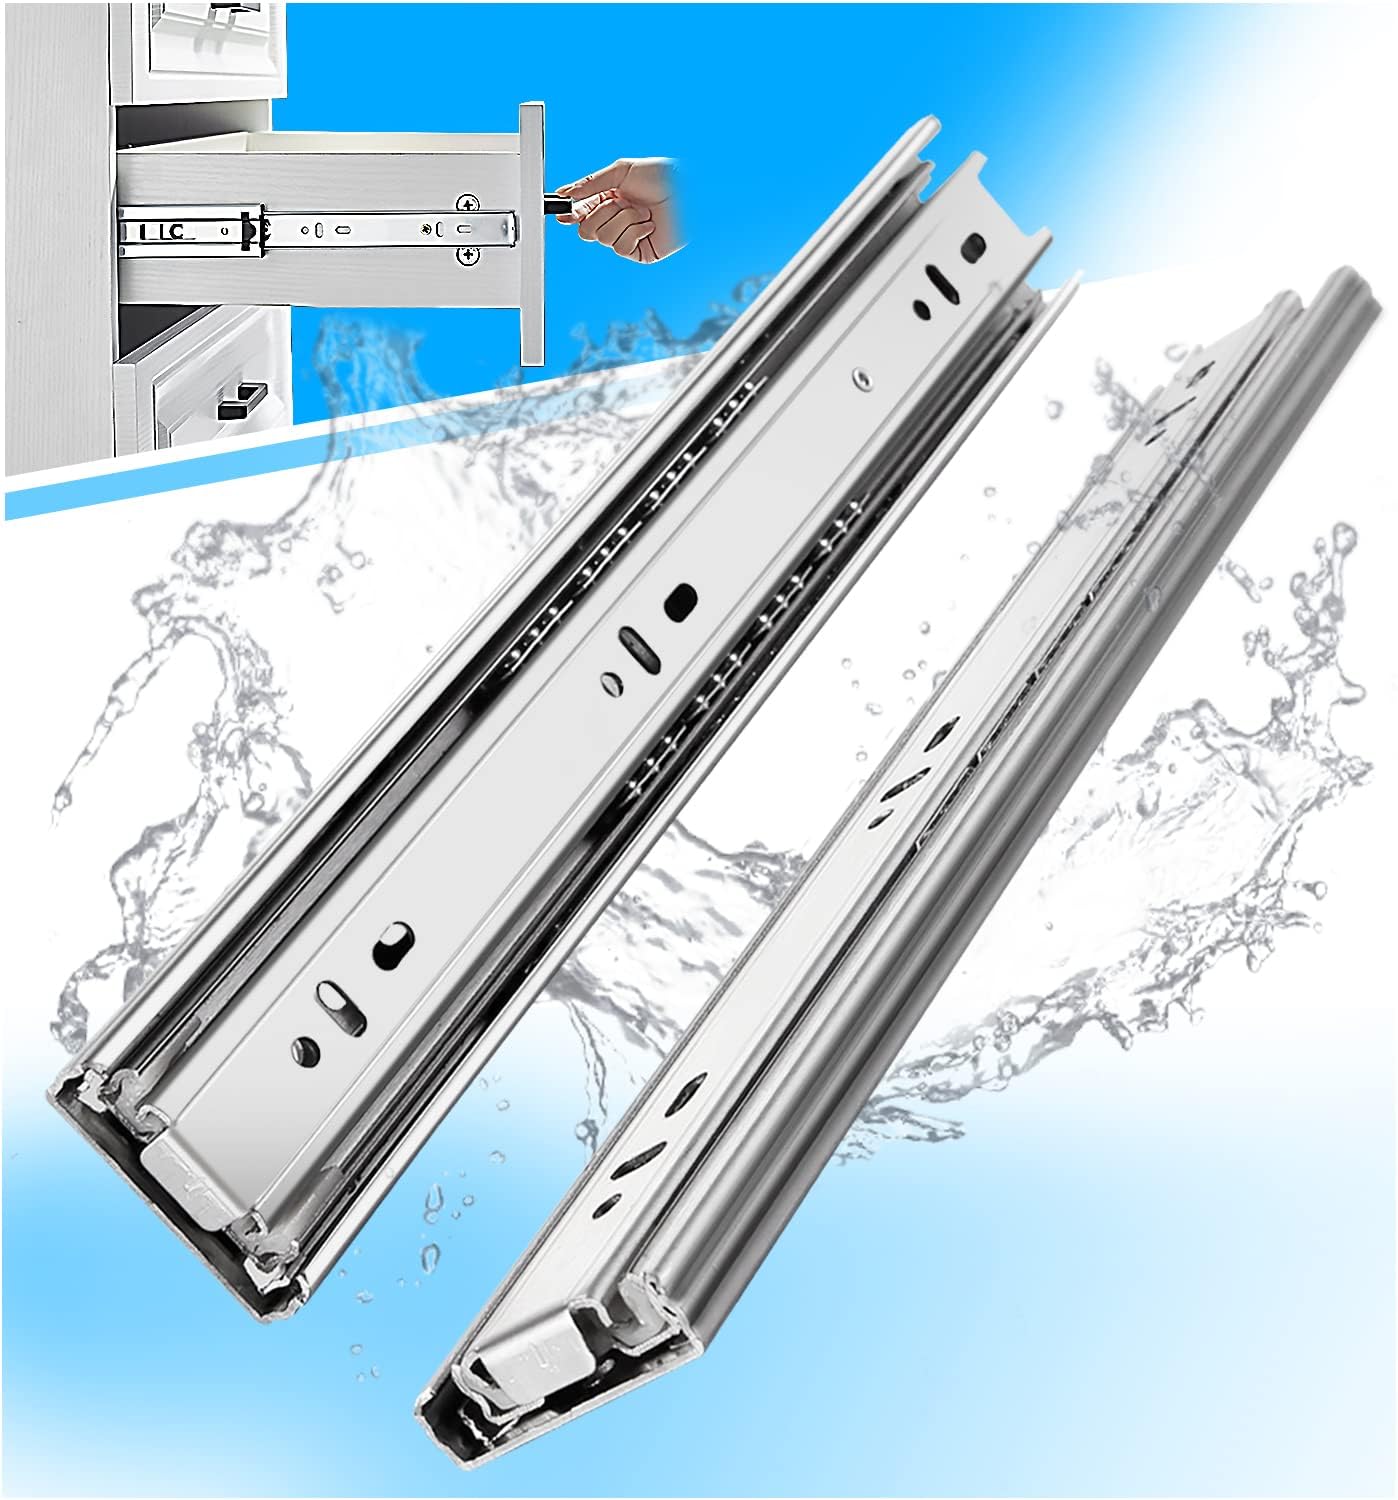 Foshan yenuo Hardware Co., Ltd YENUO Stainless Steel Full Extension Drawer Slides Side Mount 10 12 14 16 18 20 22 24 Inch Ball Bearing Metal Rails Track Guide